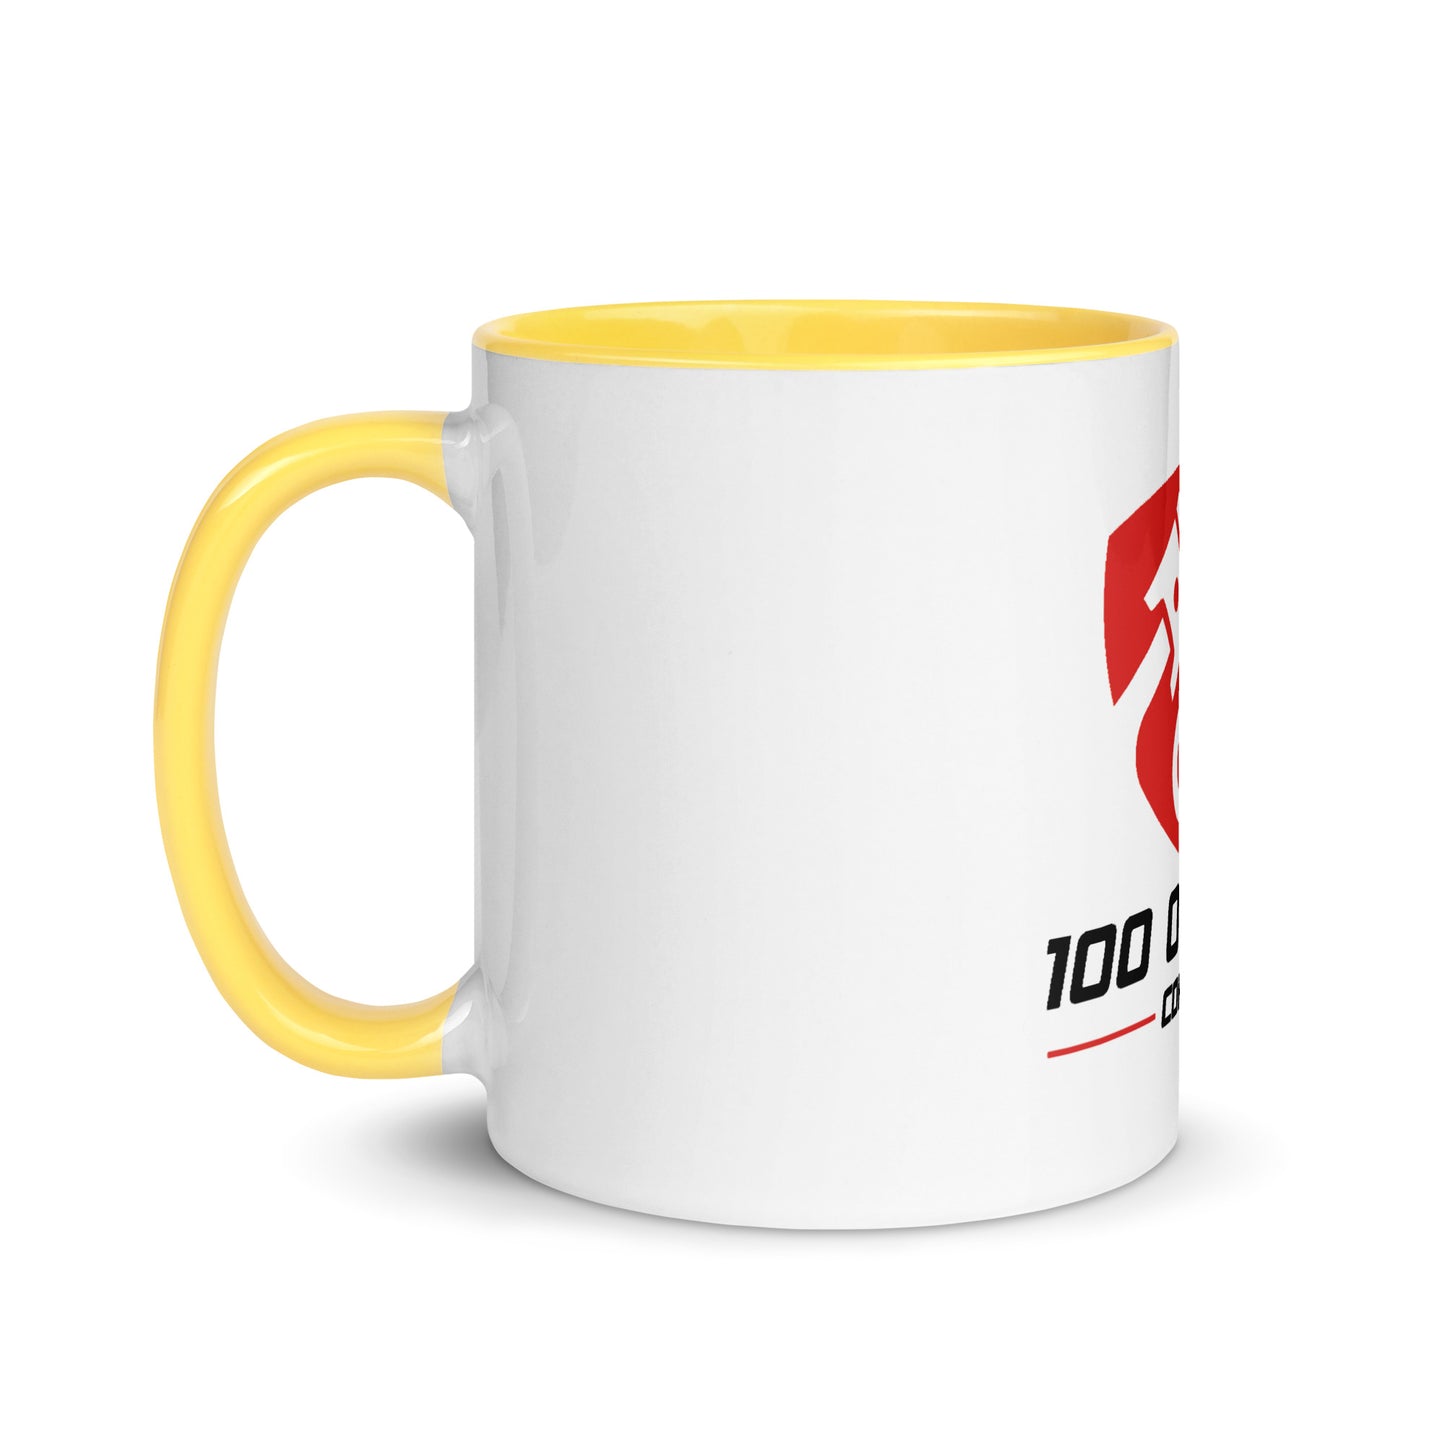 100 Octane Coffee Mug with Color Inside